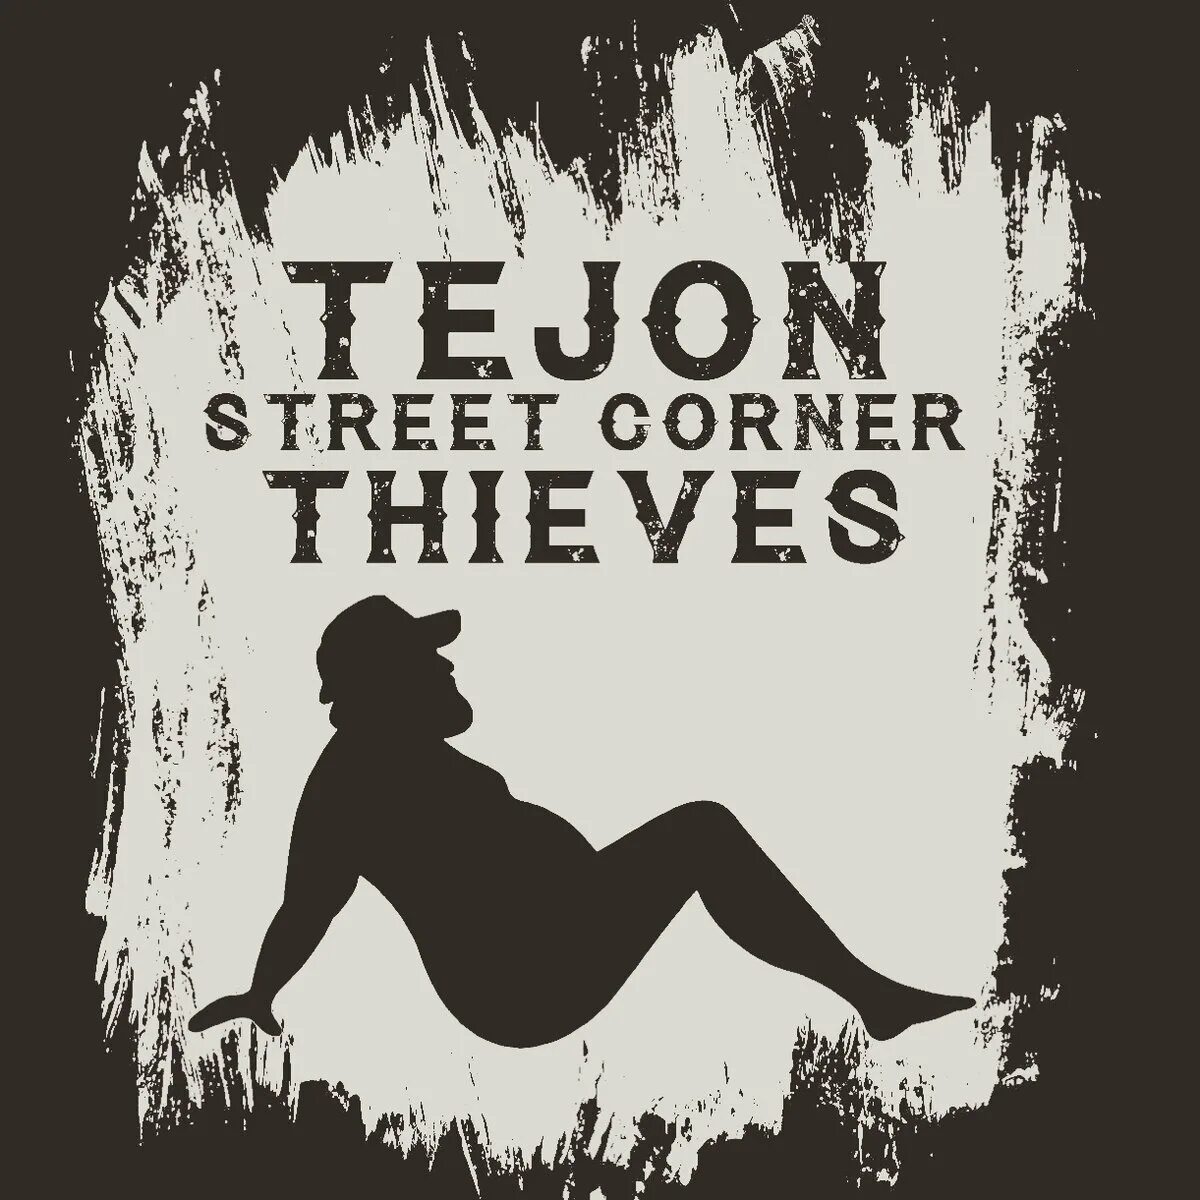 Tejon Street Corner Thieves. Tejon Street Corner Thieves Whiskey. Tejon Street Corner Thieves группа. Tejon Street Corner Thieves кто это. Tejon street corner